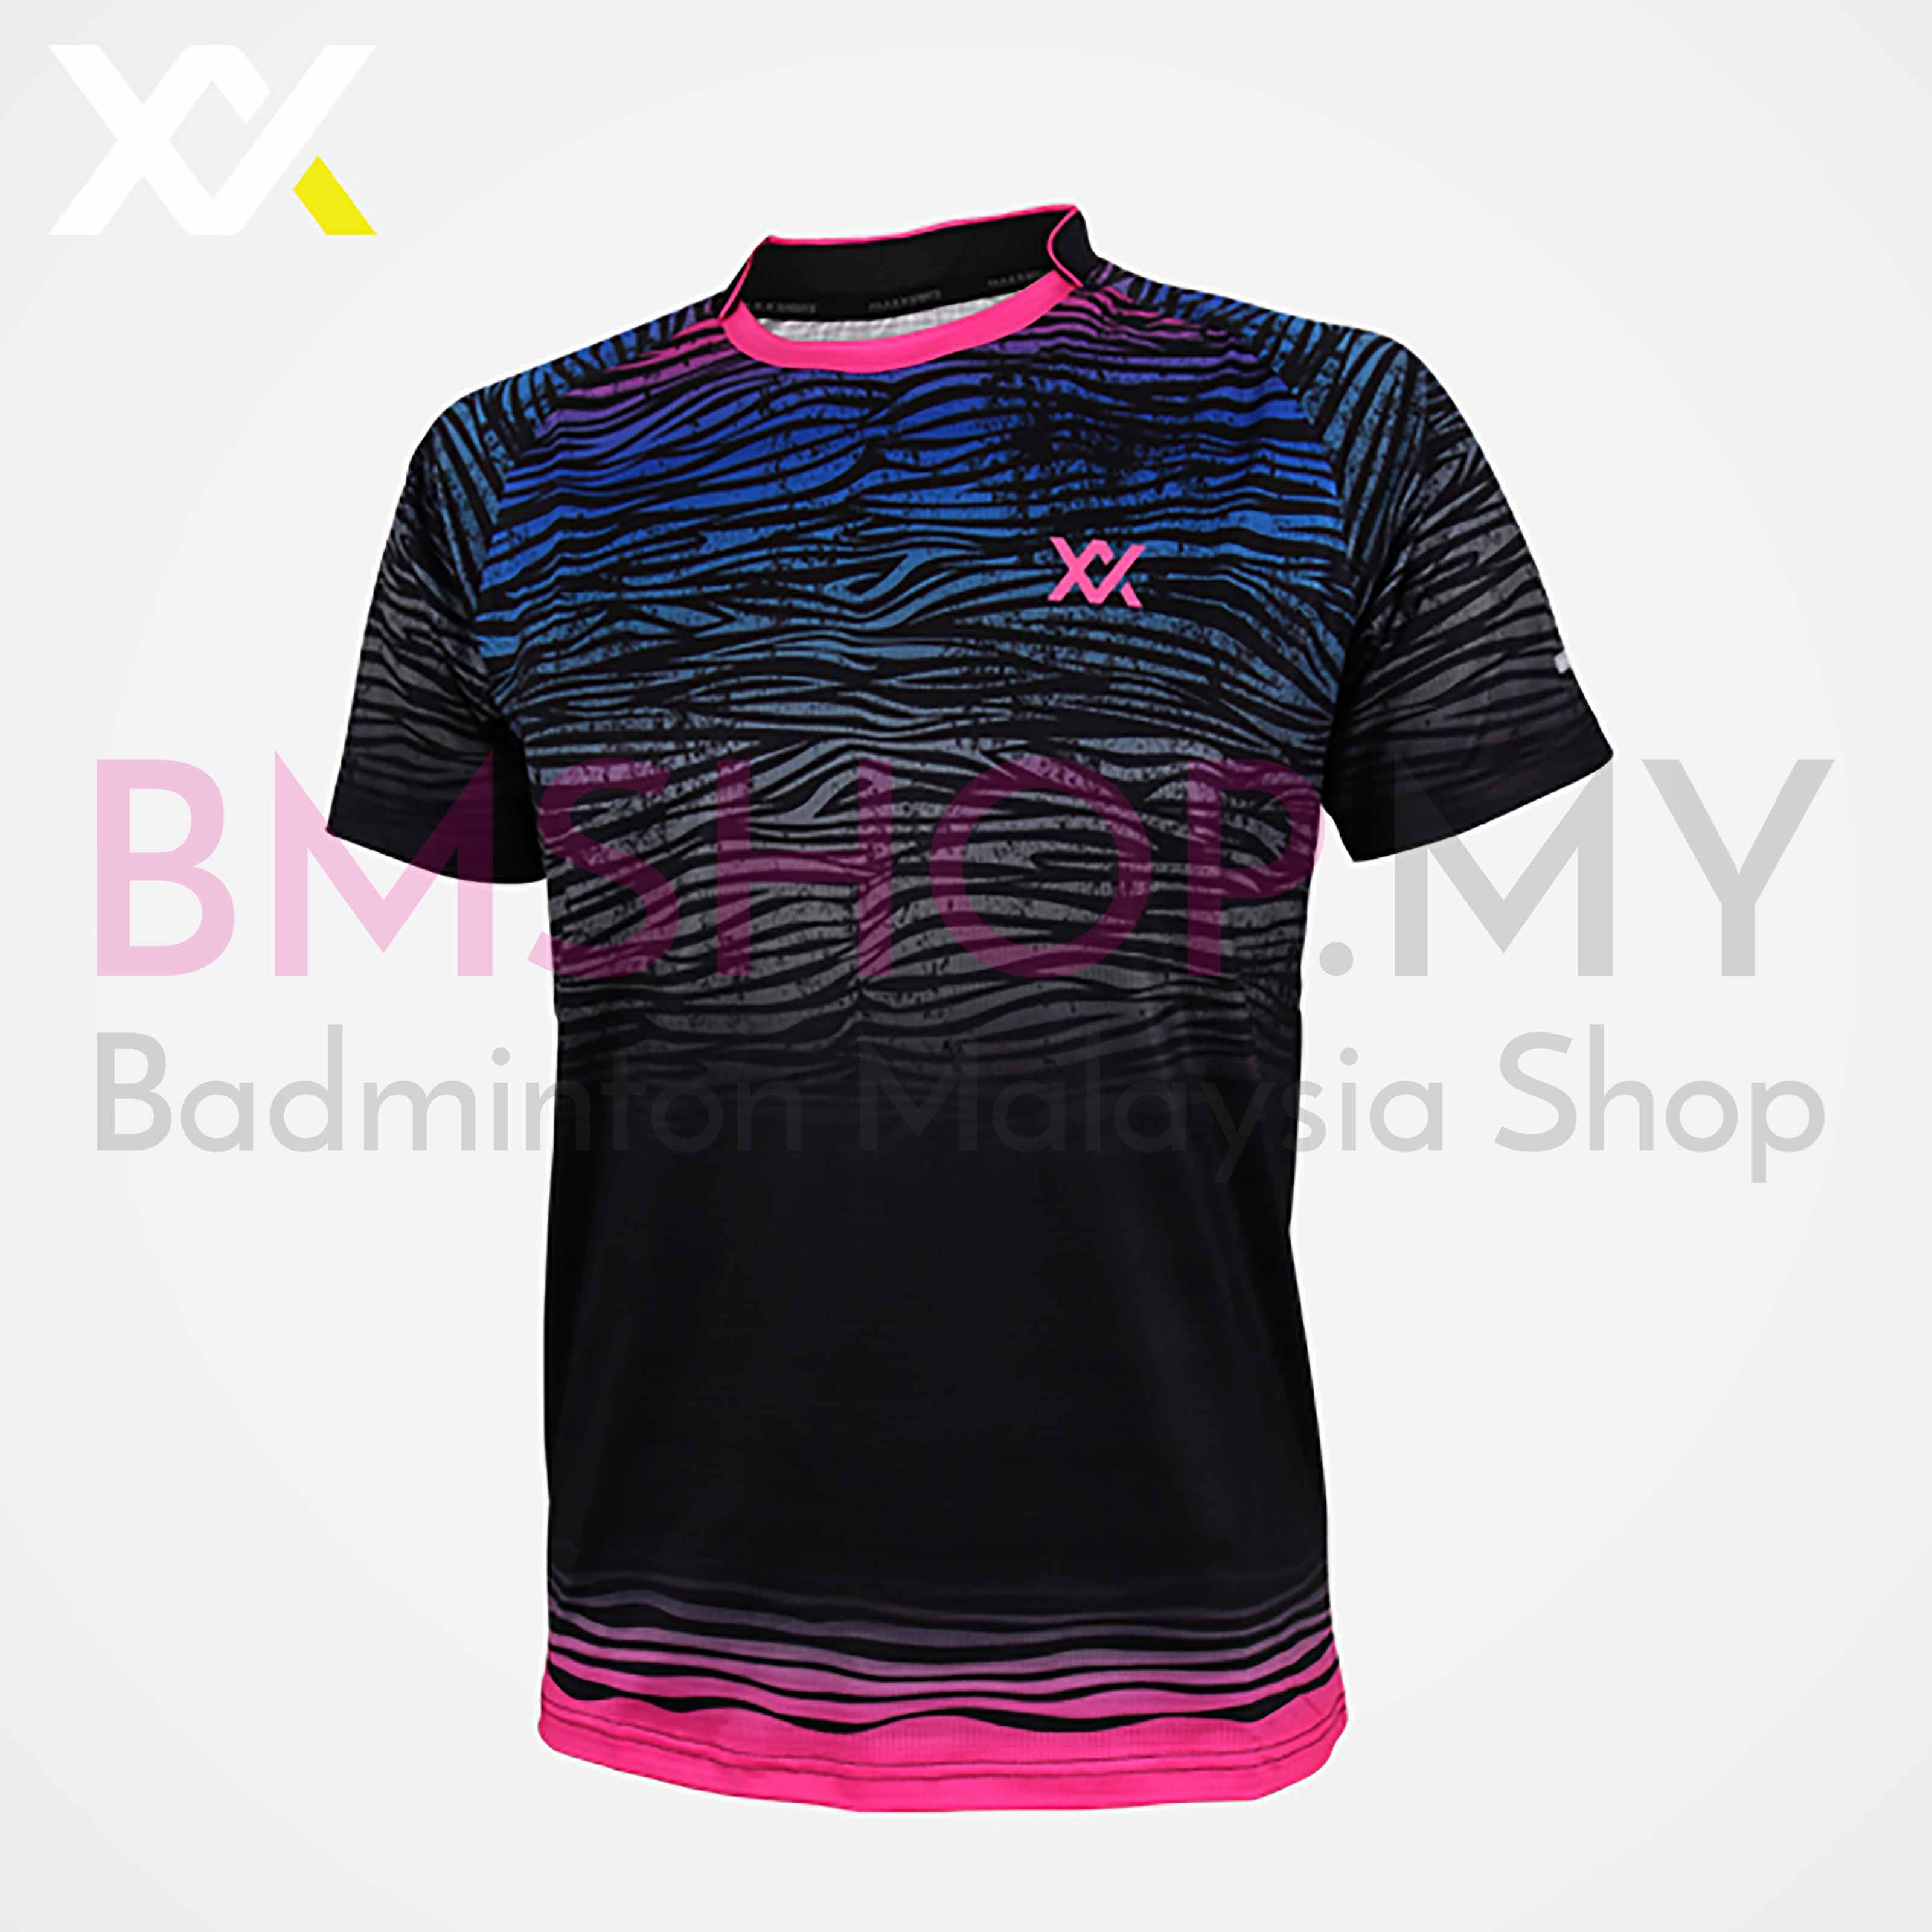 MAXX Shirt Tournament Tee MXSET020T (Black)